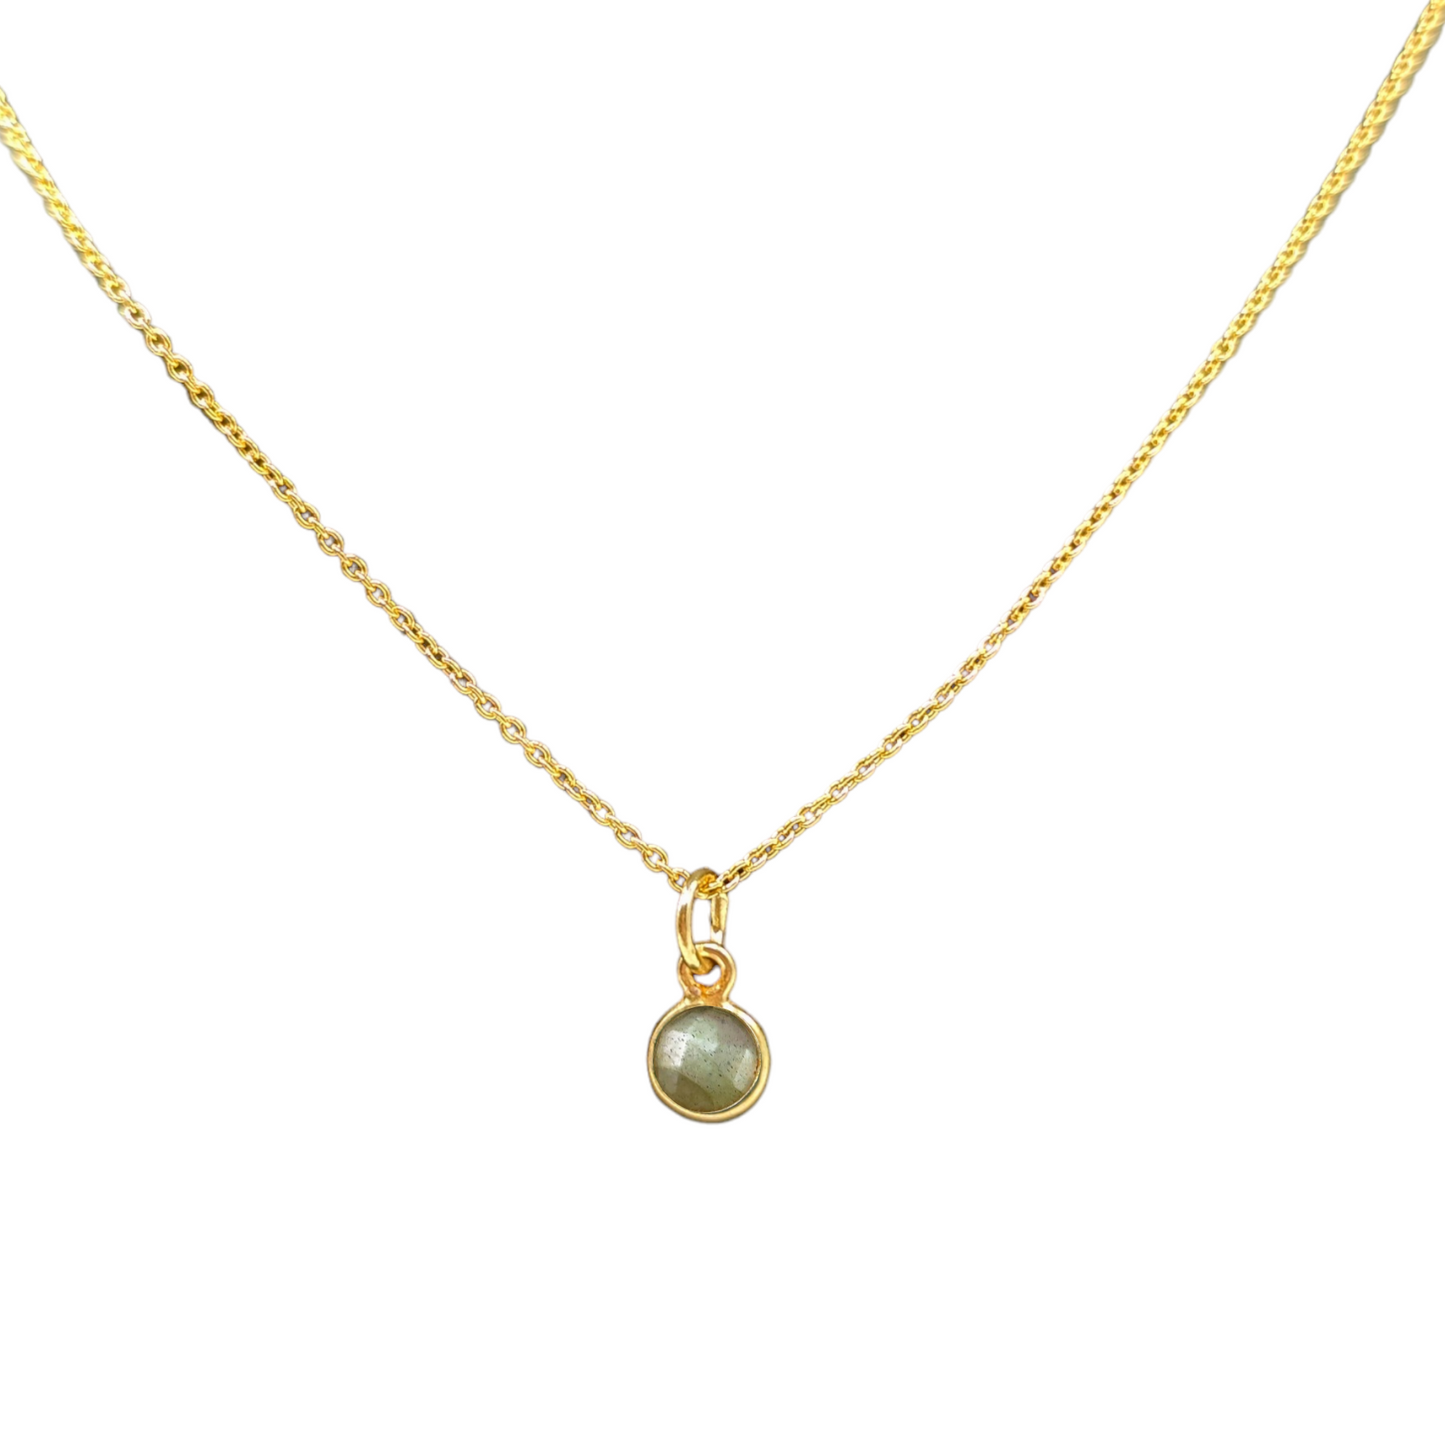 Gold birthstone necklace